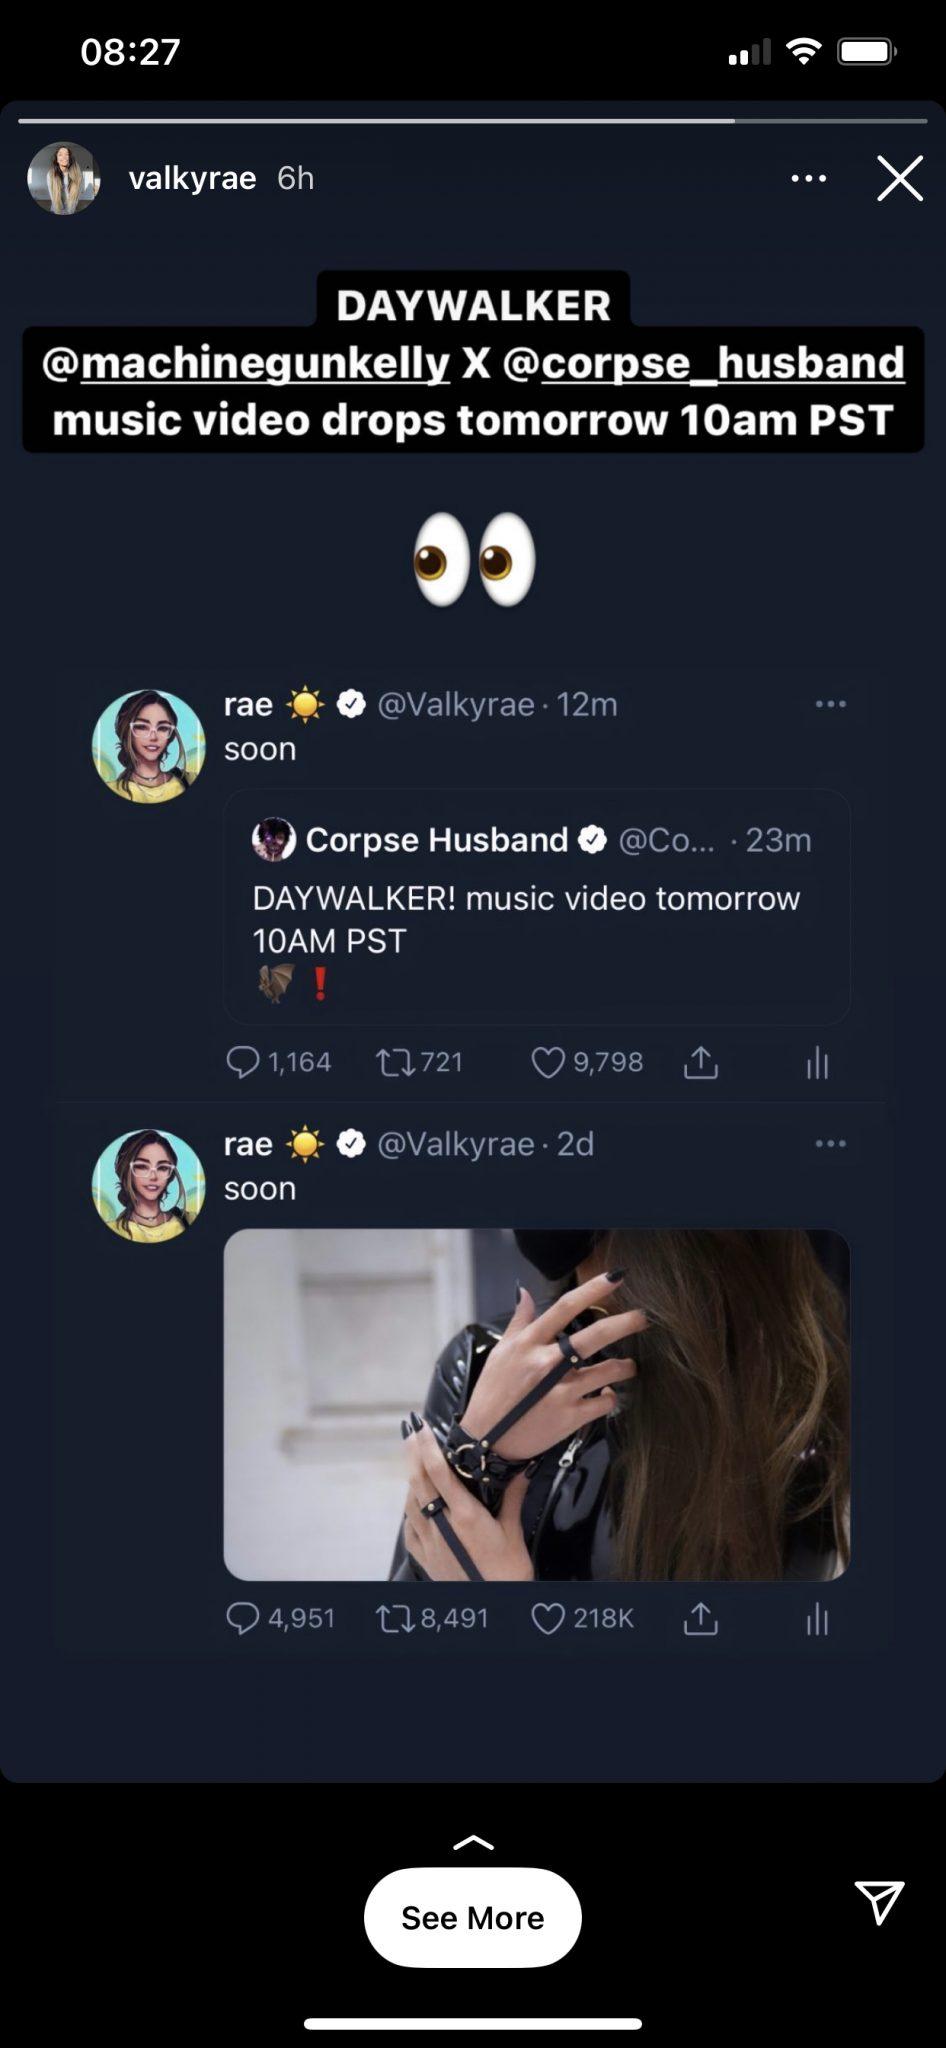 Valkyrae teasing involvement in Corpse X MGK Daywalker video